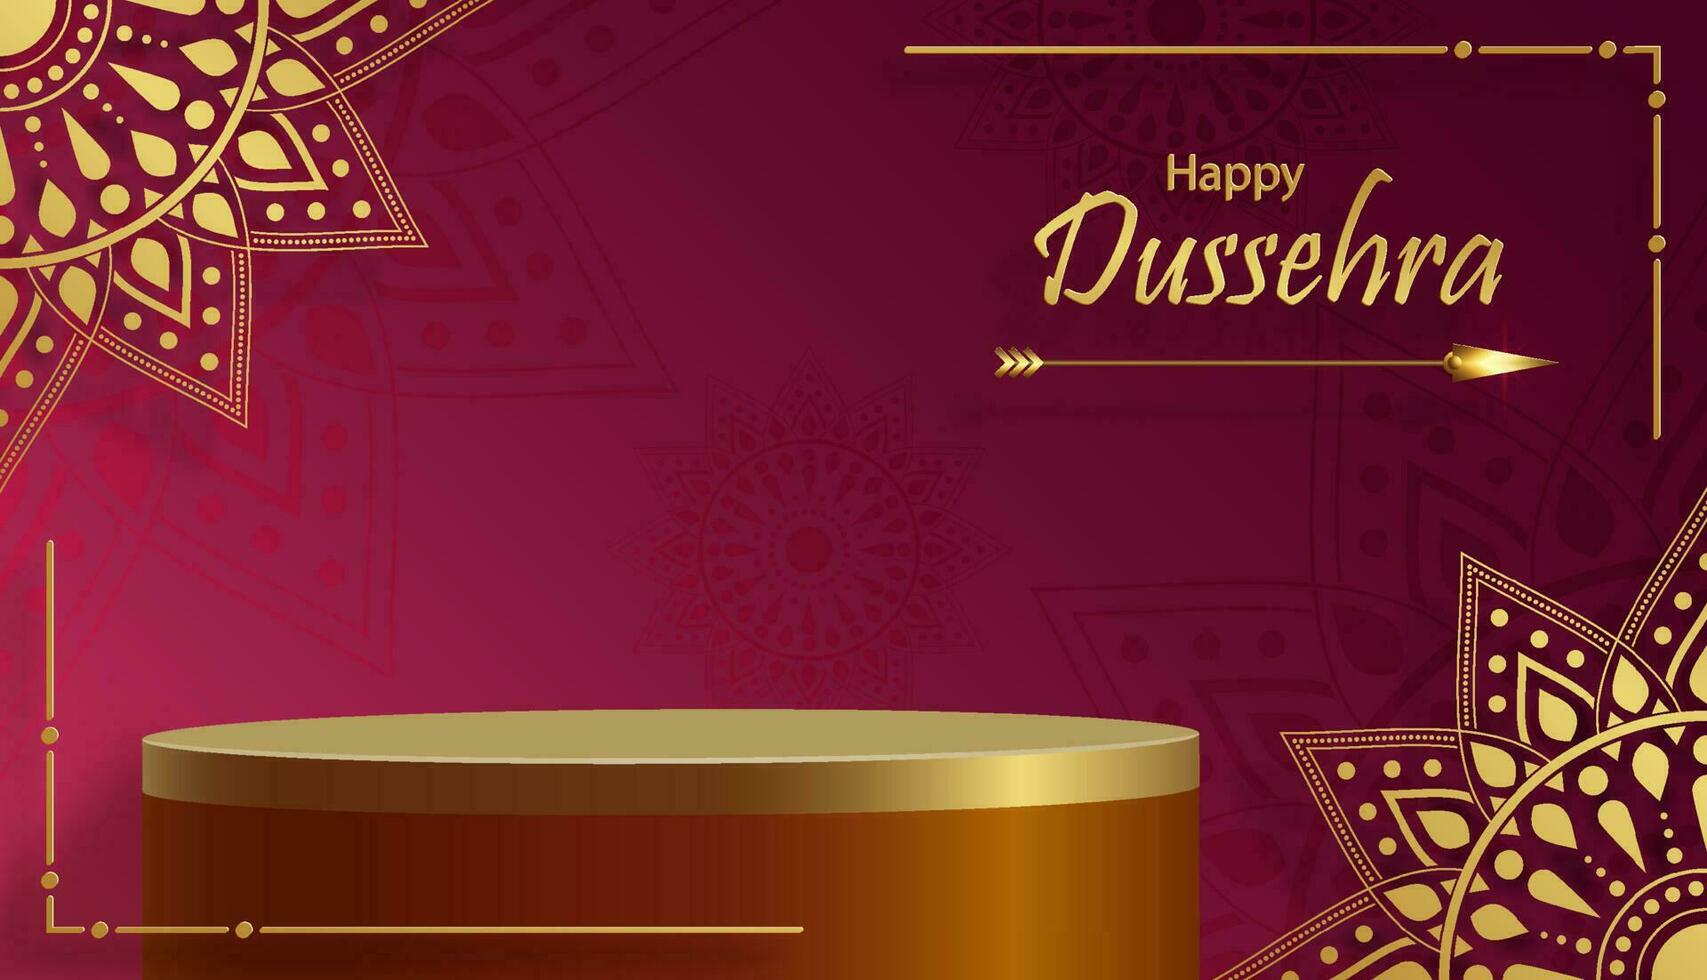 Happy Dussehra festival celebration vector